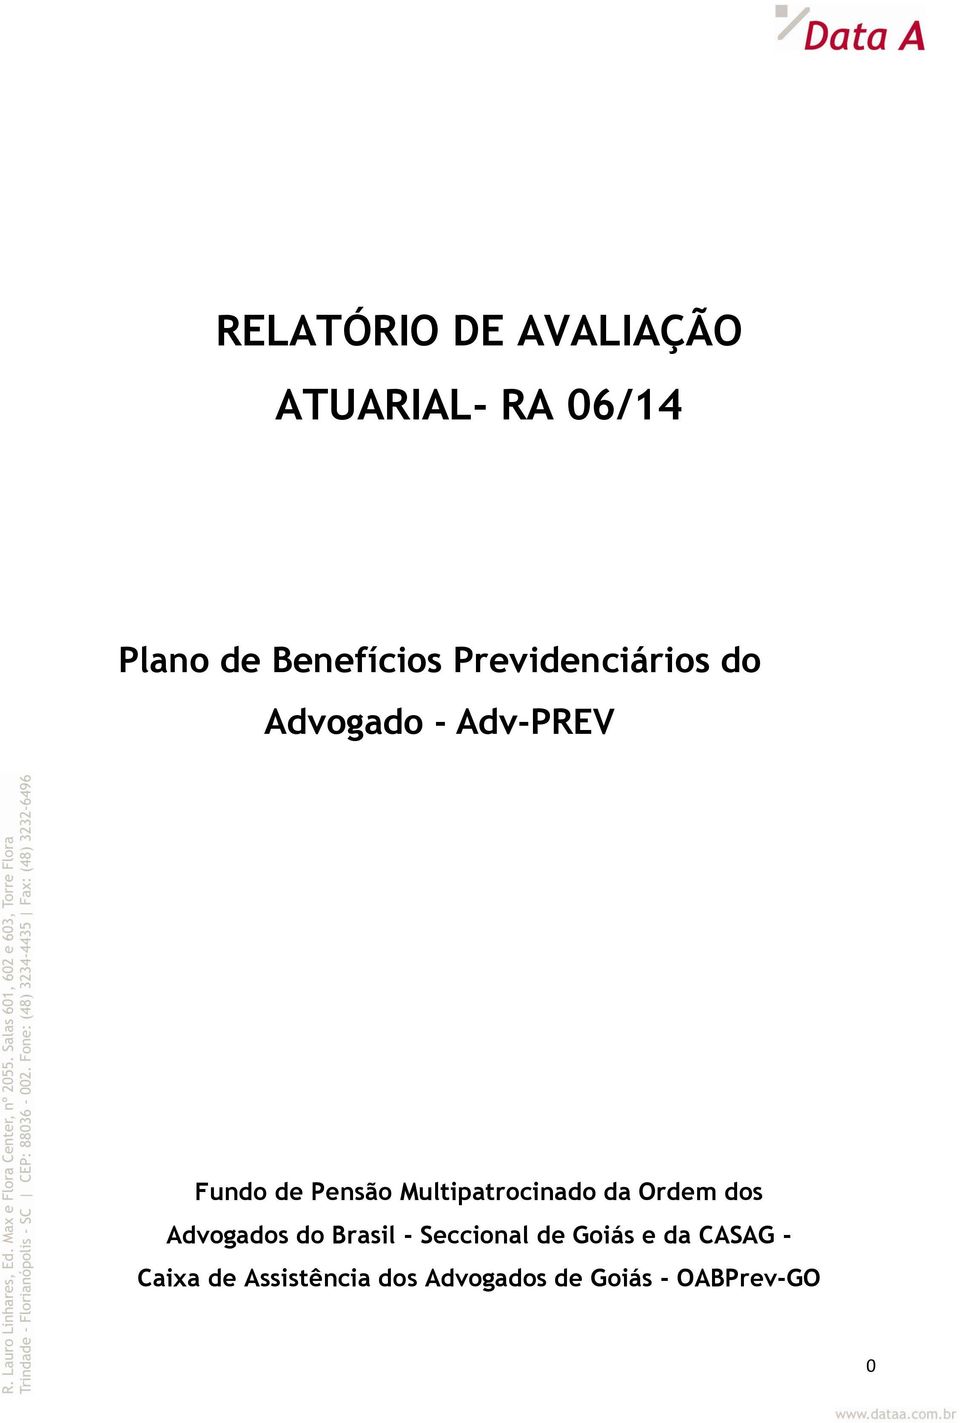 Multipatrocinado da Ordem dos Advogados do Brasil - Seccional de